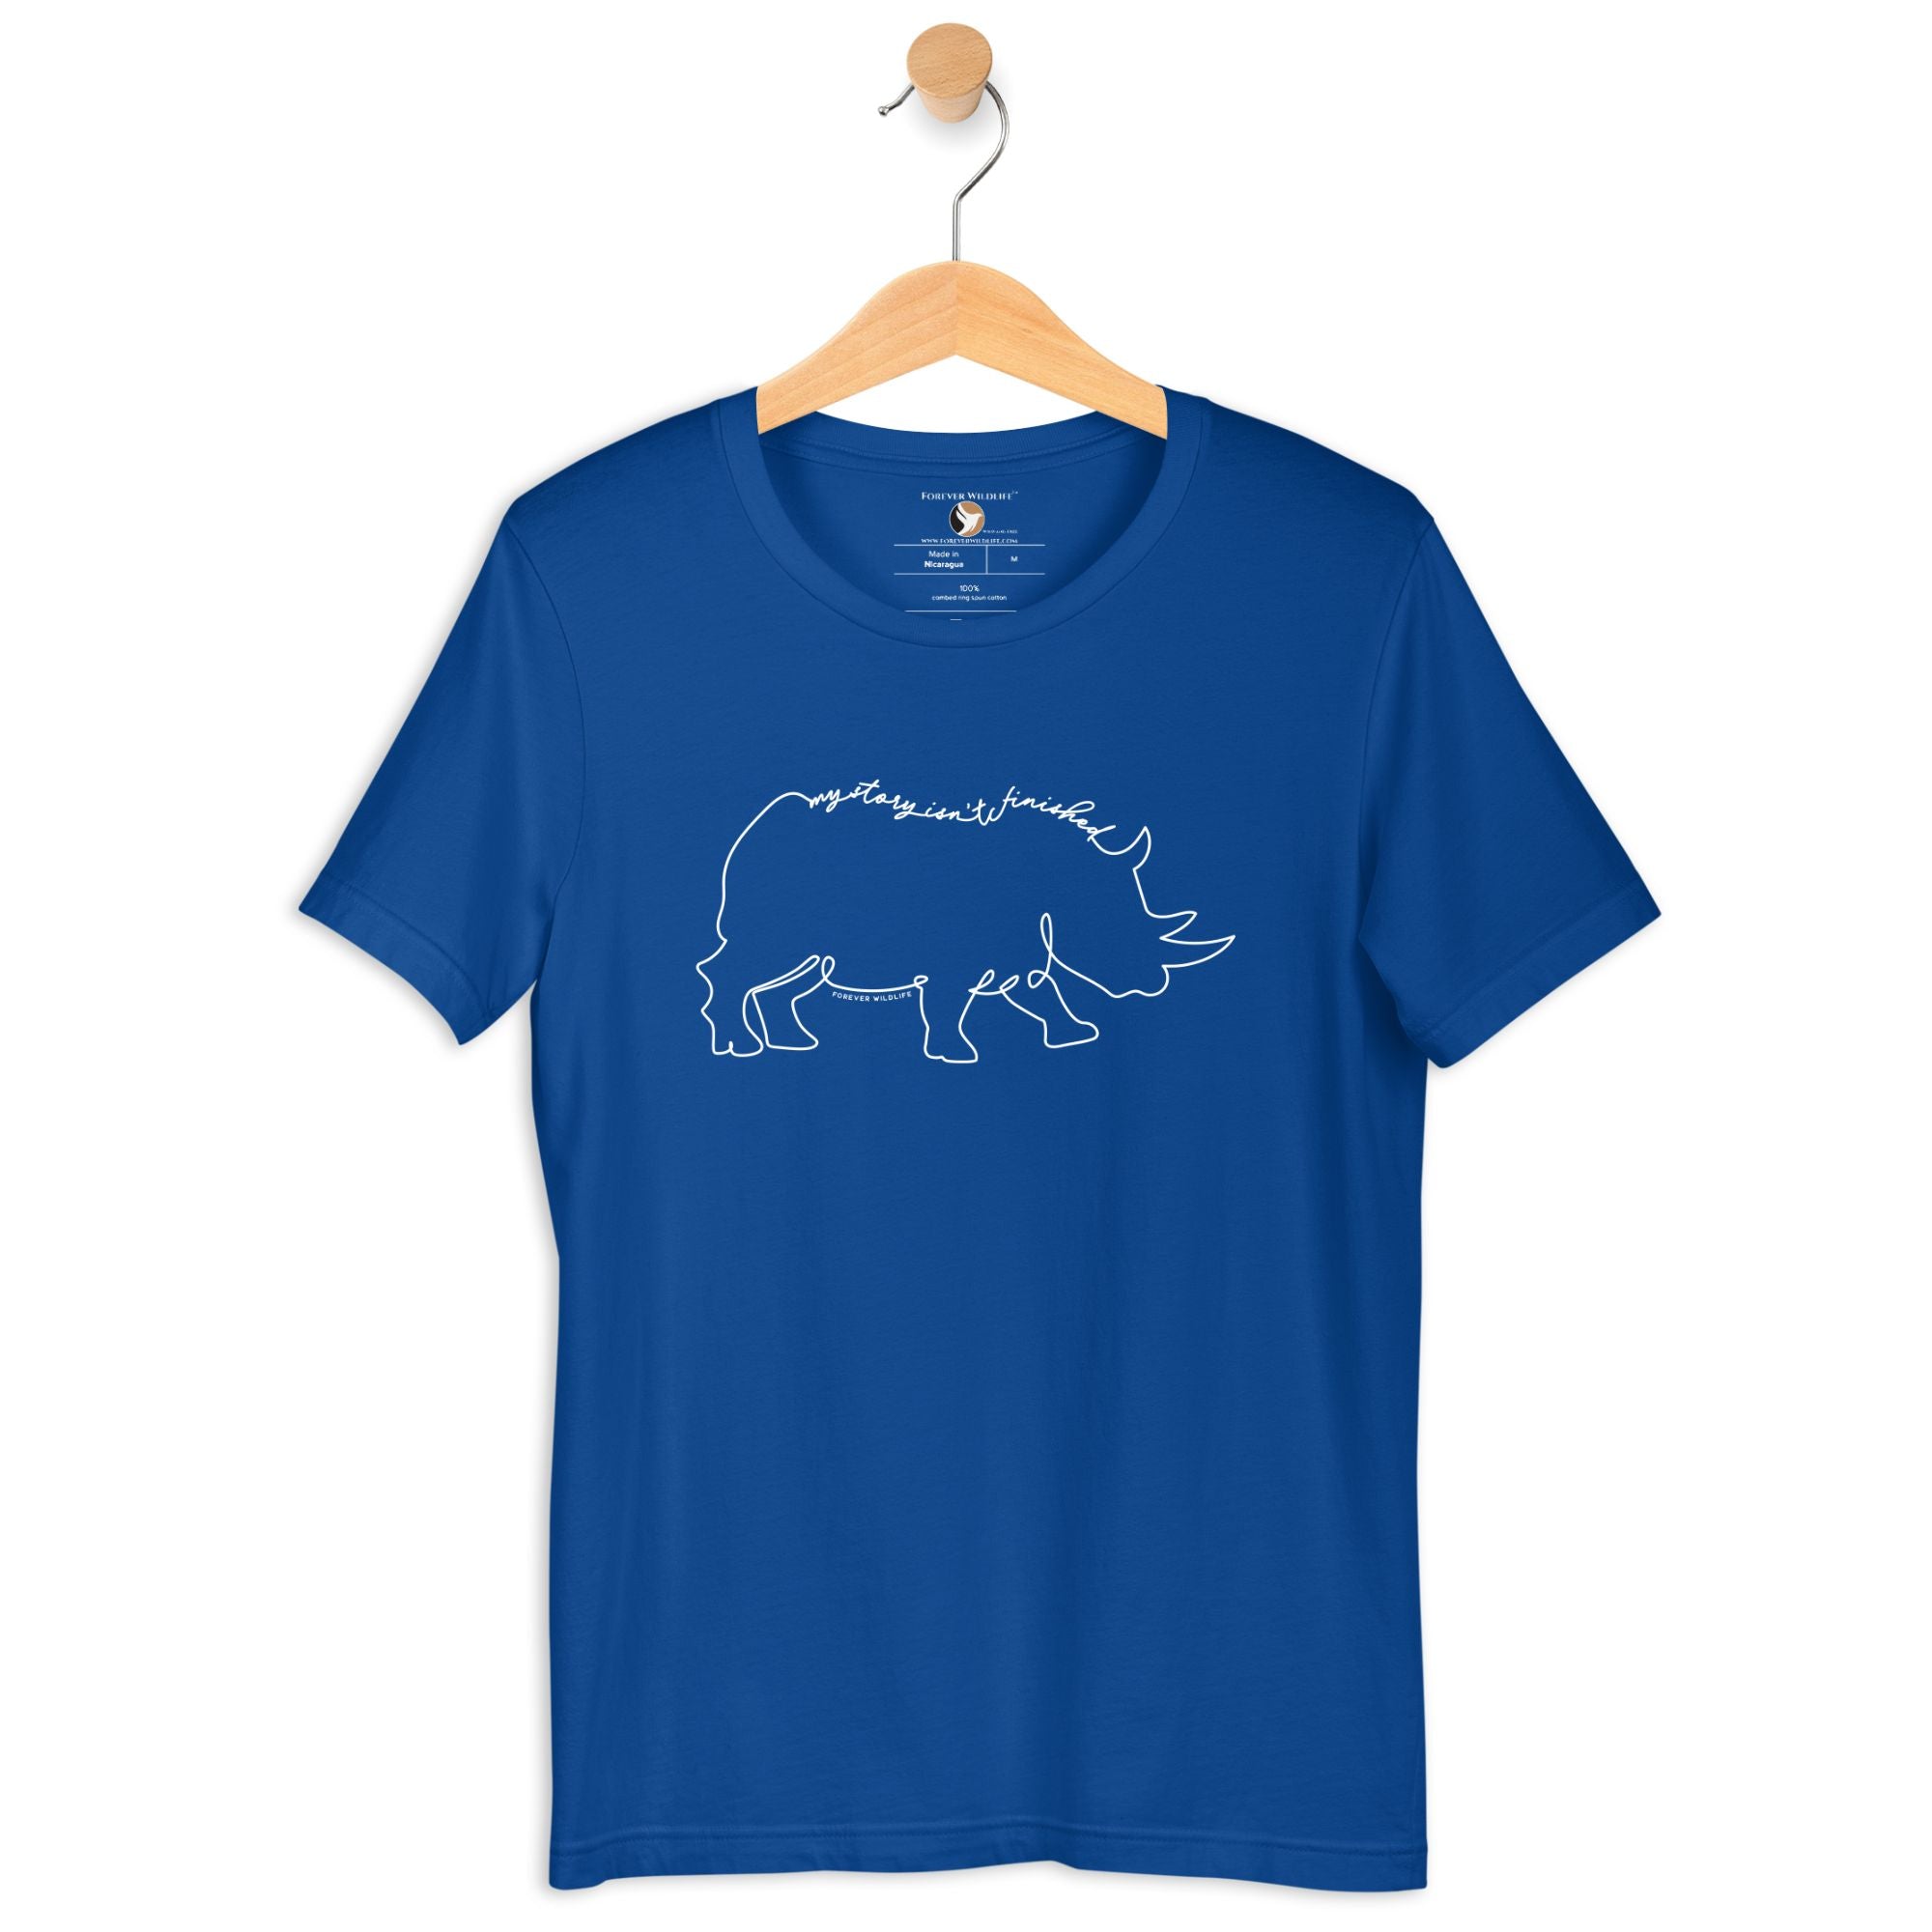 Rhino T-Shirt in True Royal – Premium Wildlife T-Shirt Design with My Story Isn't Finished Text, Rhino Shirts and Wildlife Clothing